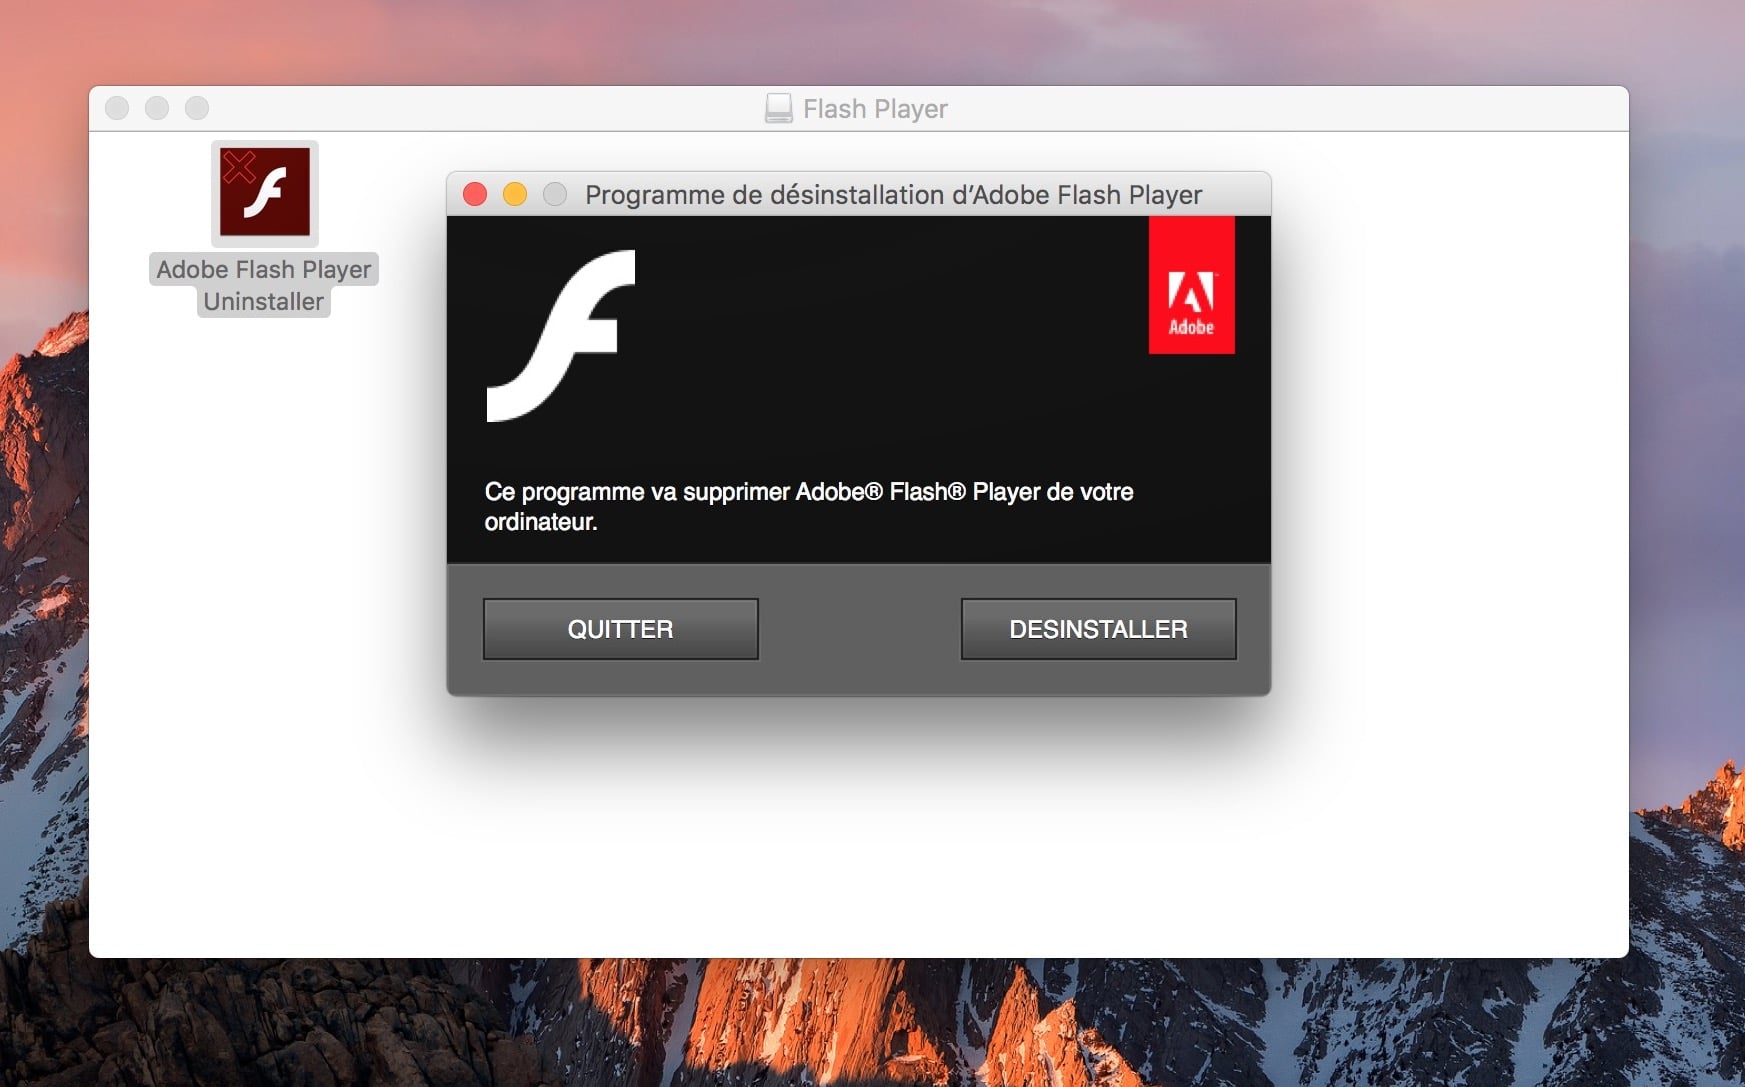 Flash Player For Mac Os X Yosemite